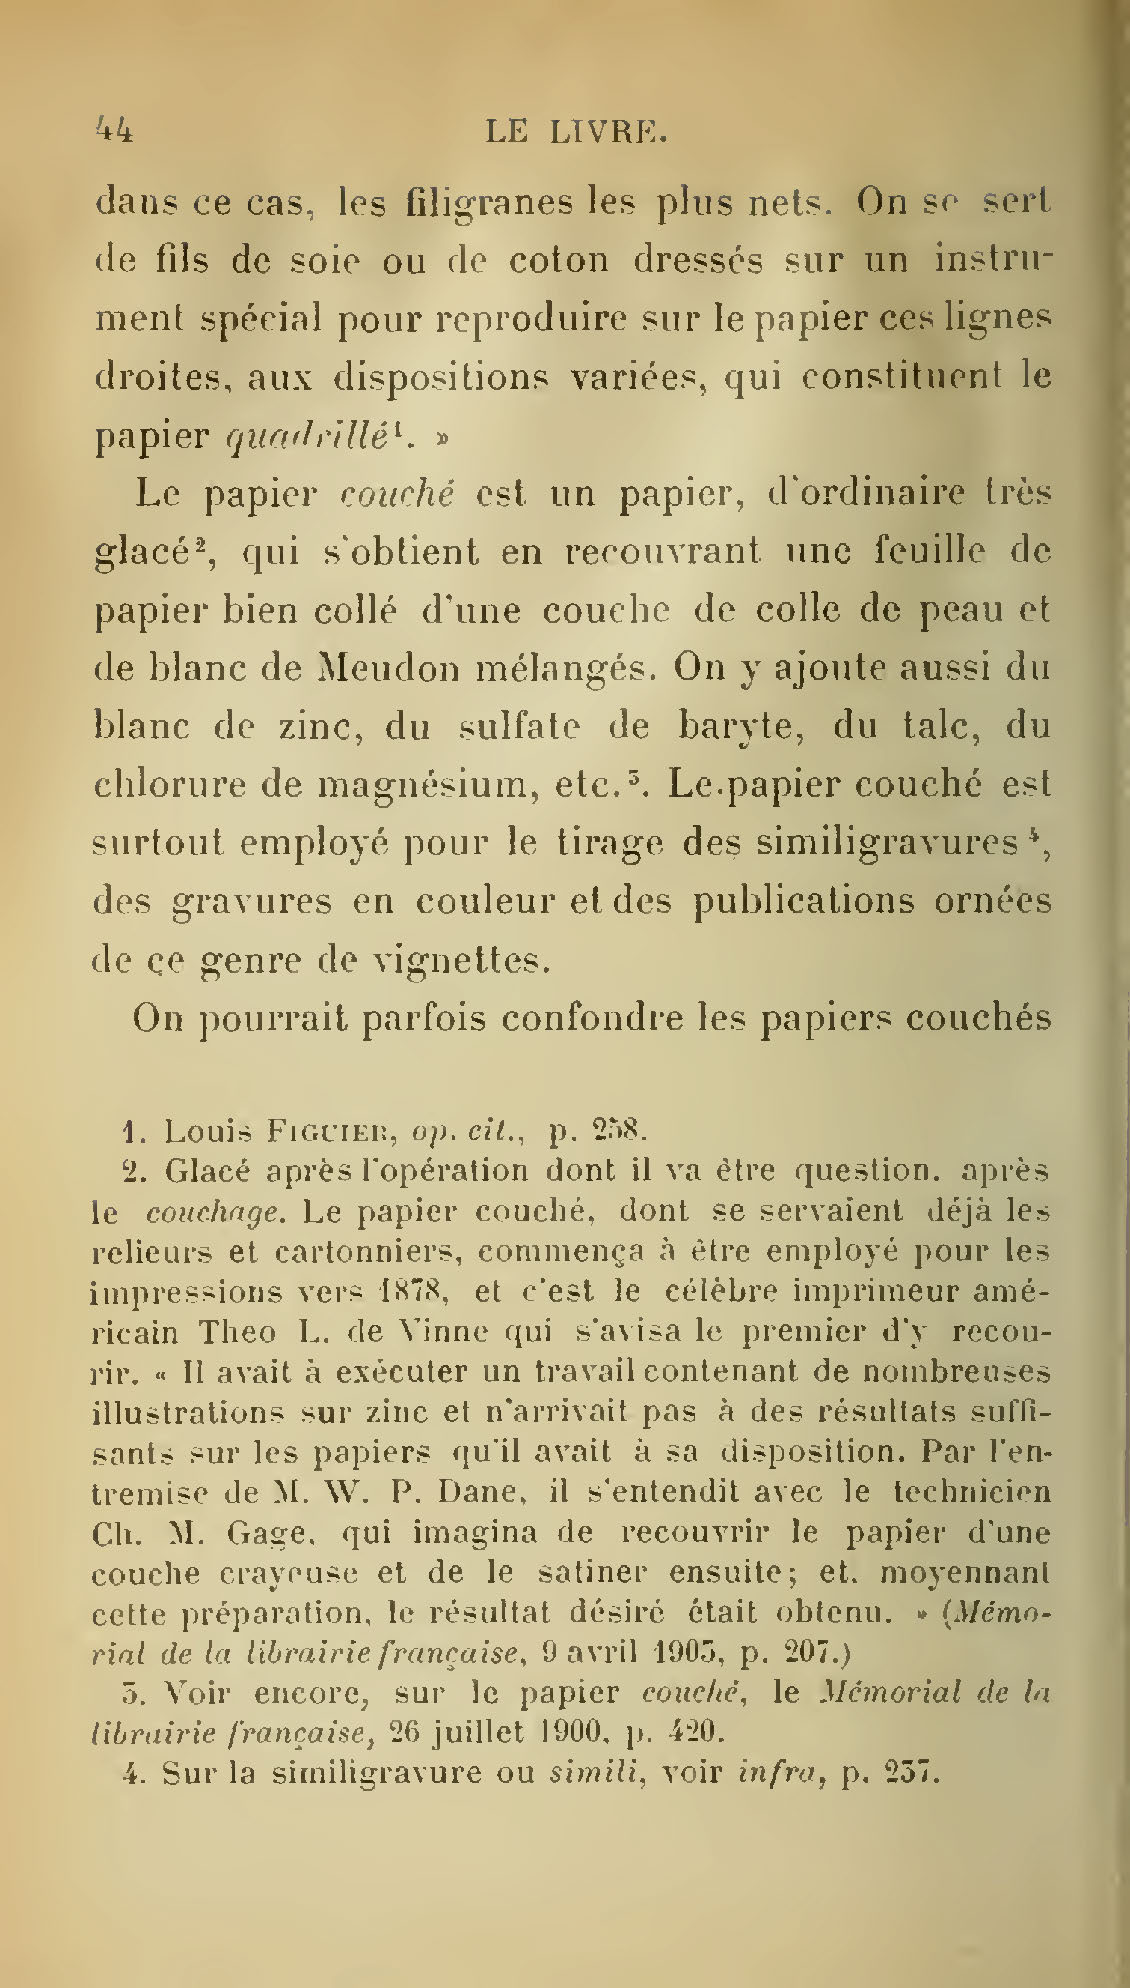 Albert Cim, Le Livre, t. III, p. 44.